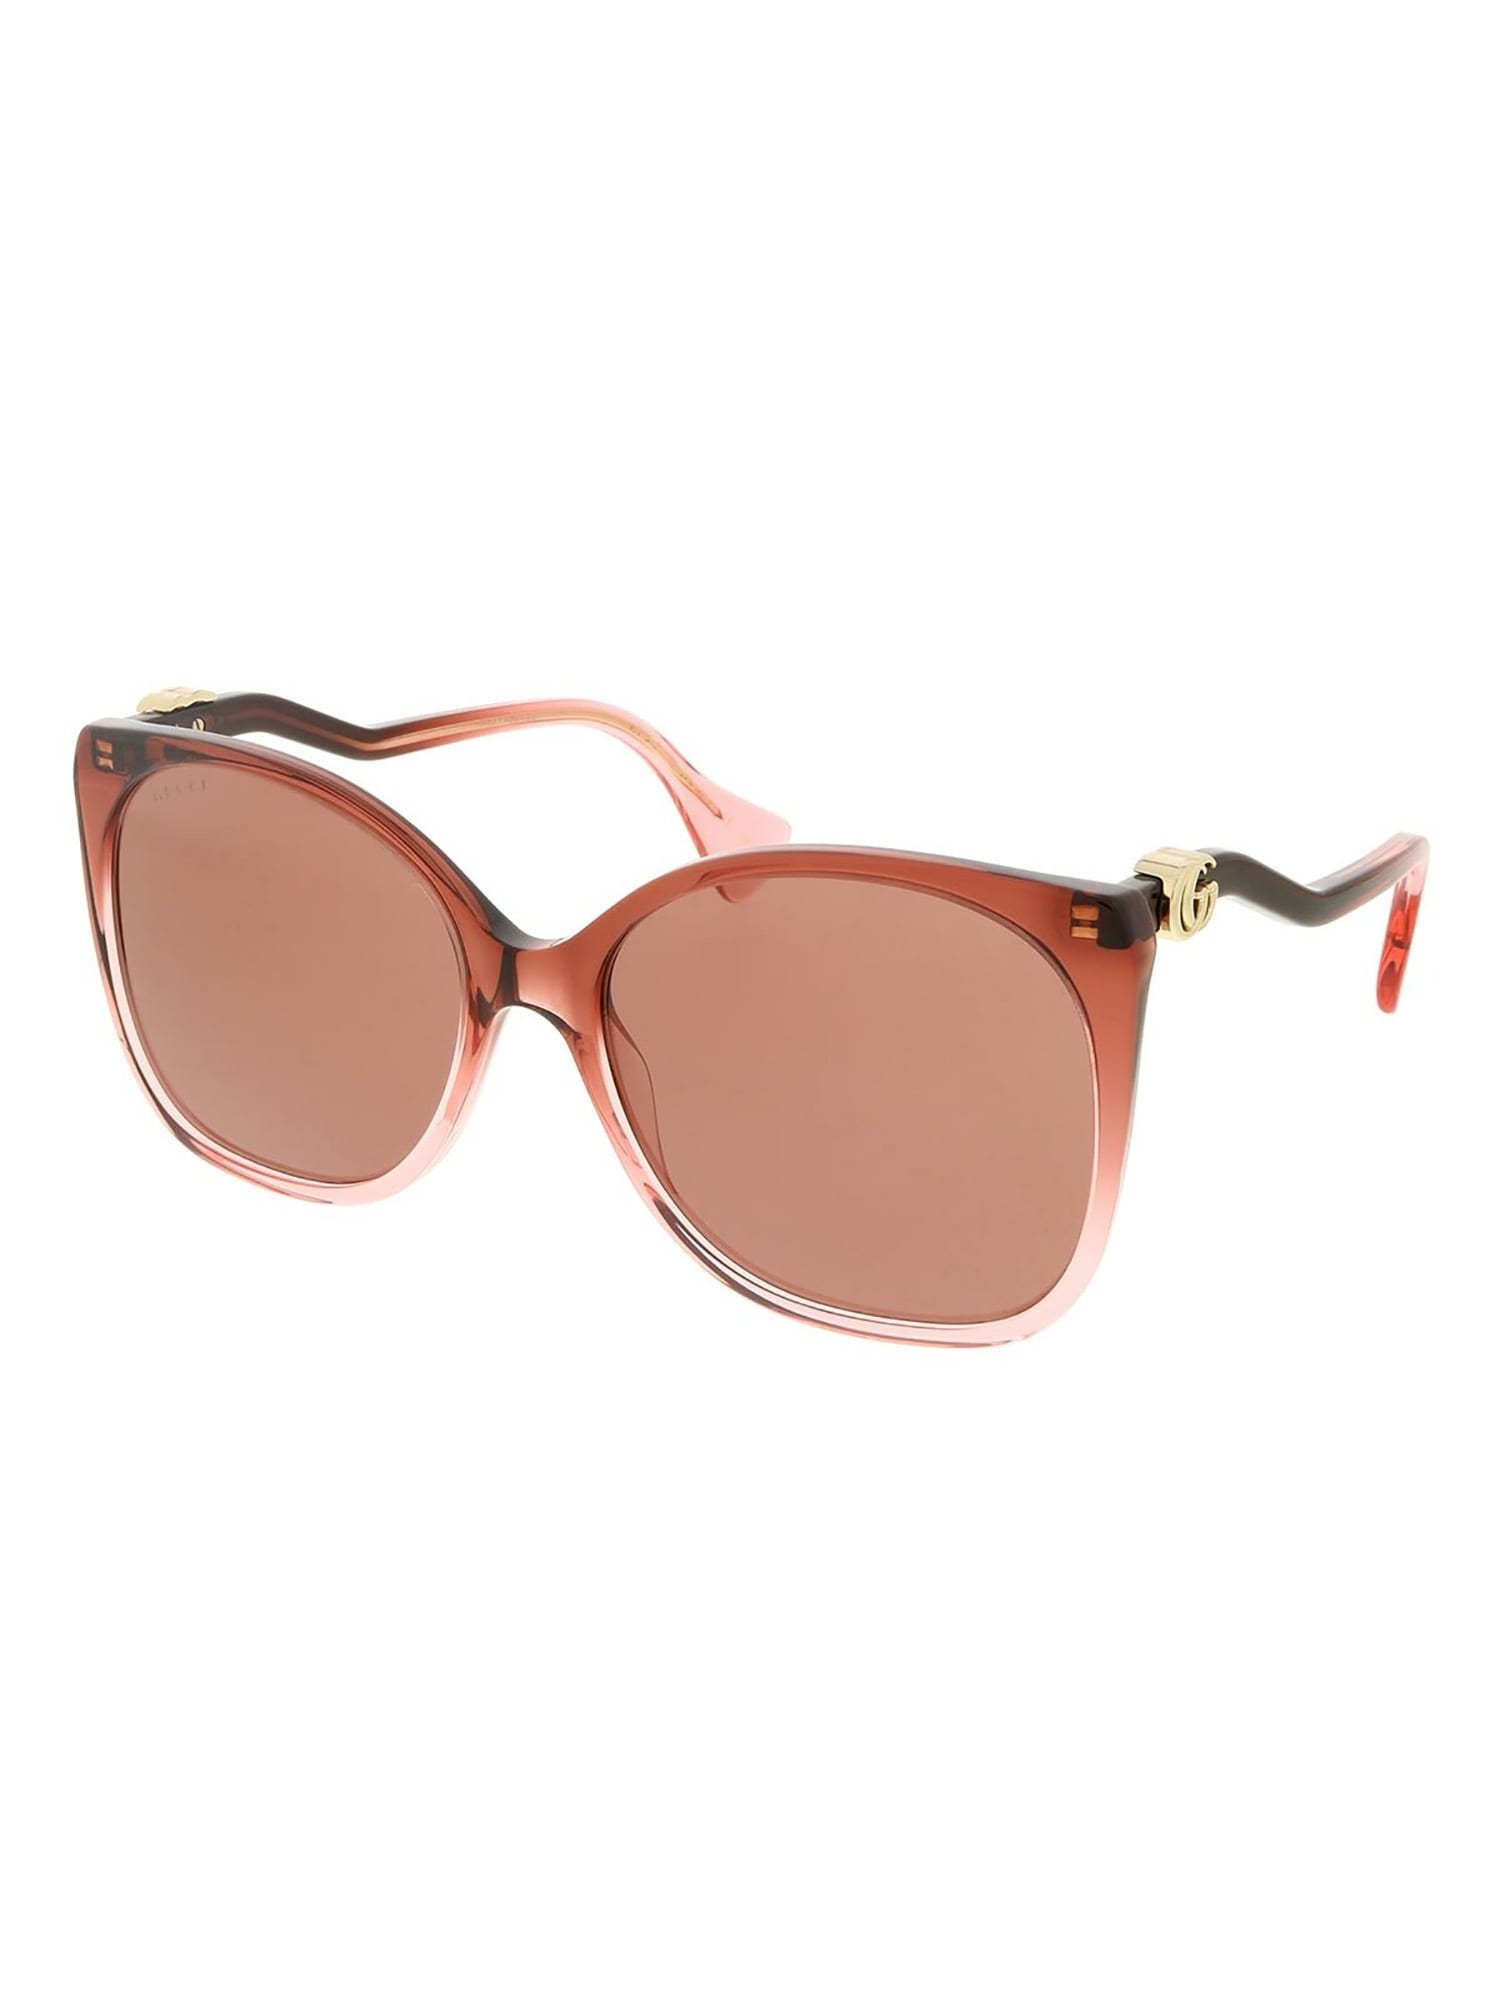 Gucci Eyewear GG1010S Sunglasses